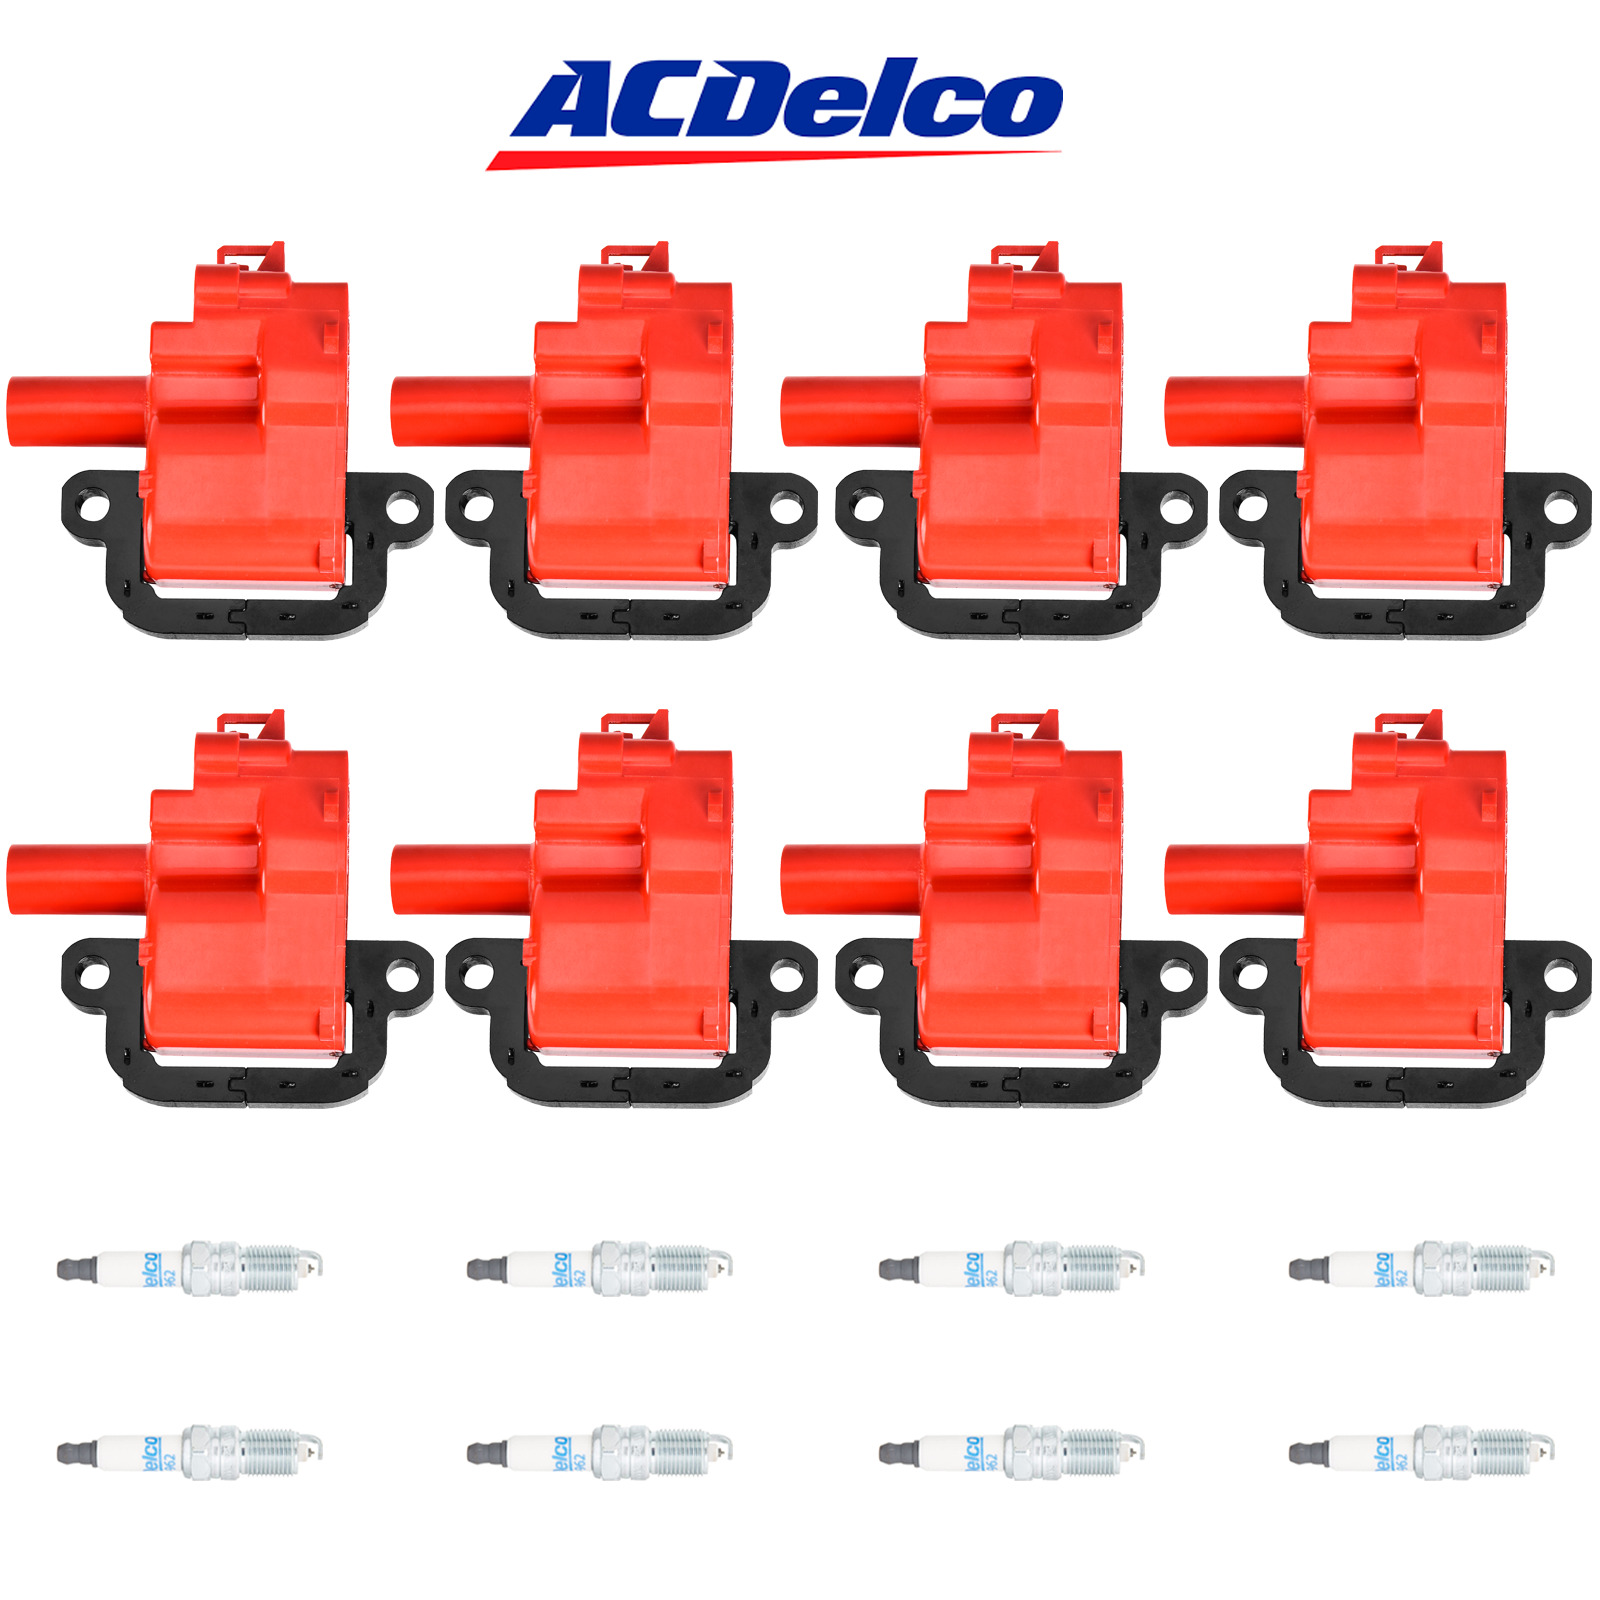 ACDELCO Double Platinum Spark Plug + Performance Ignition Coil For 98-04 Pontiac